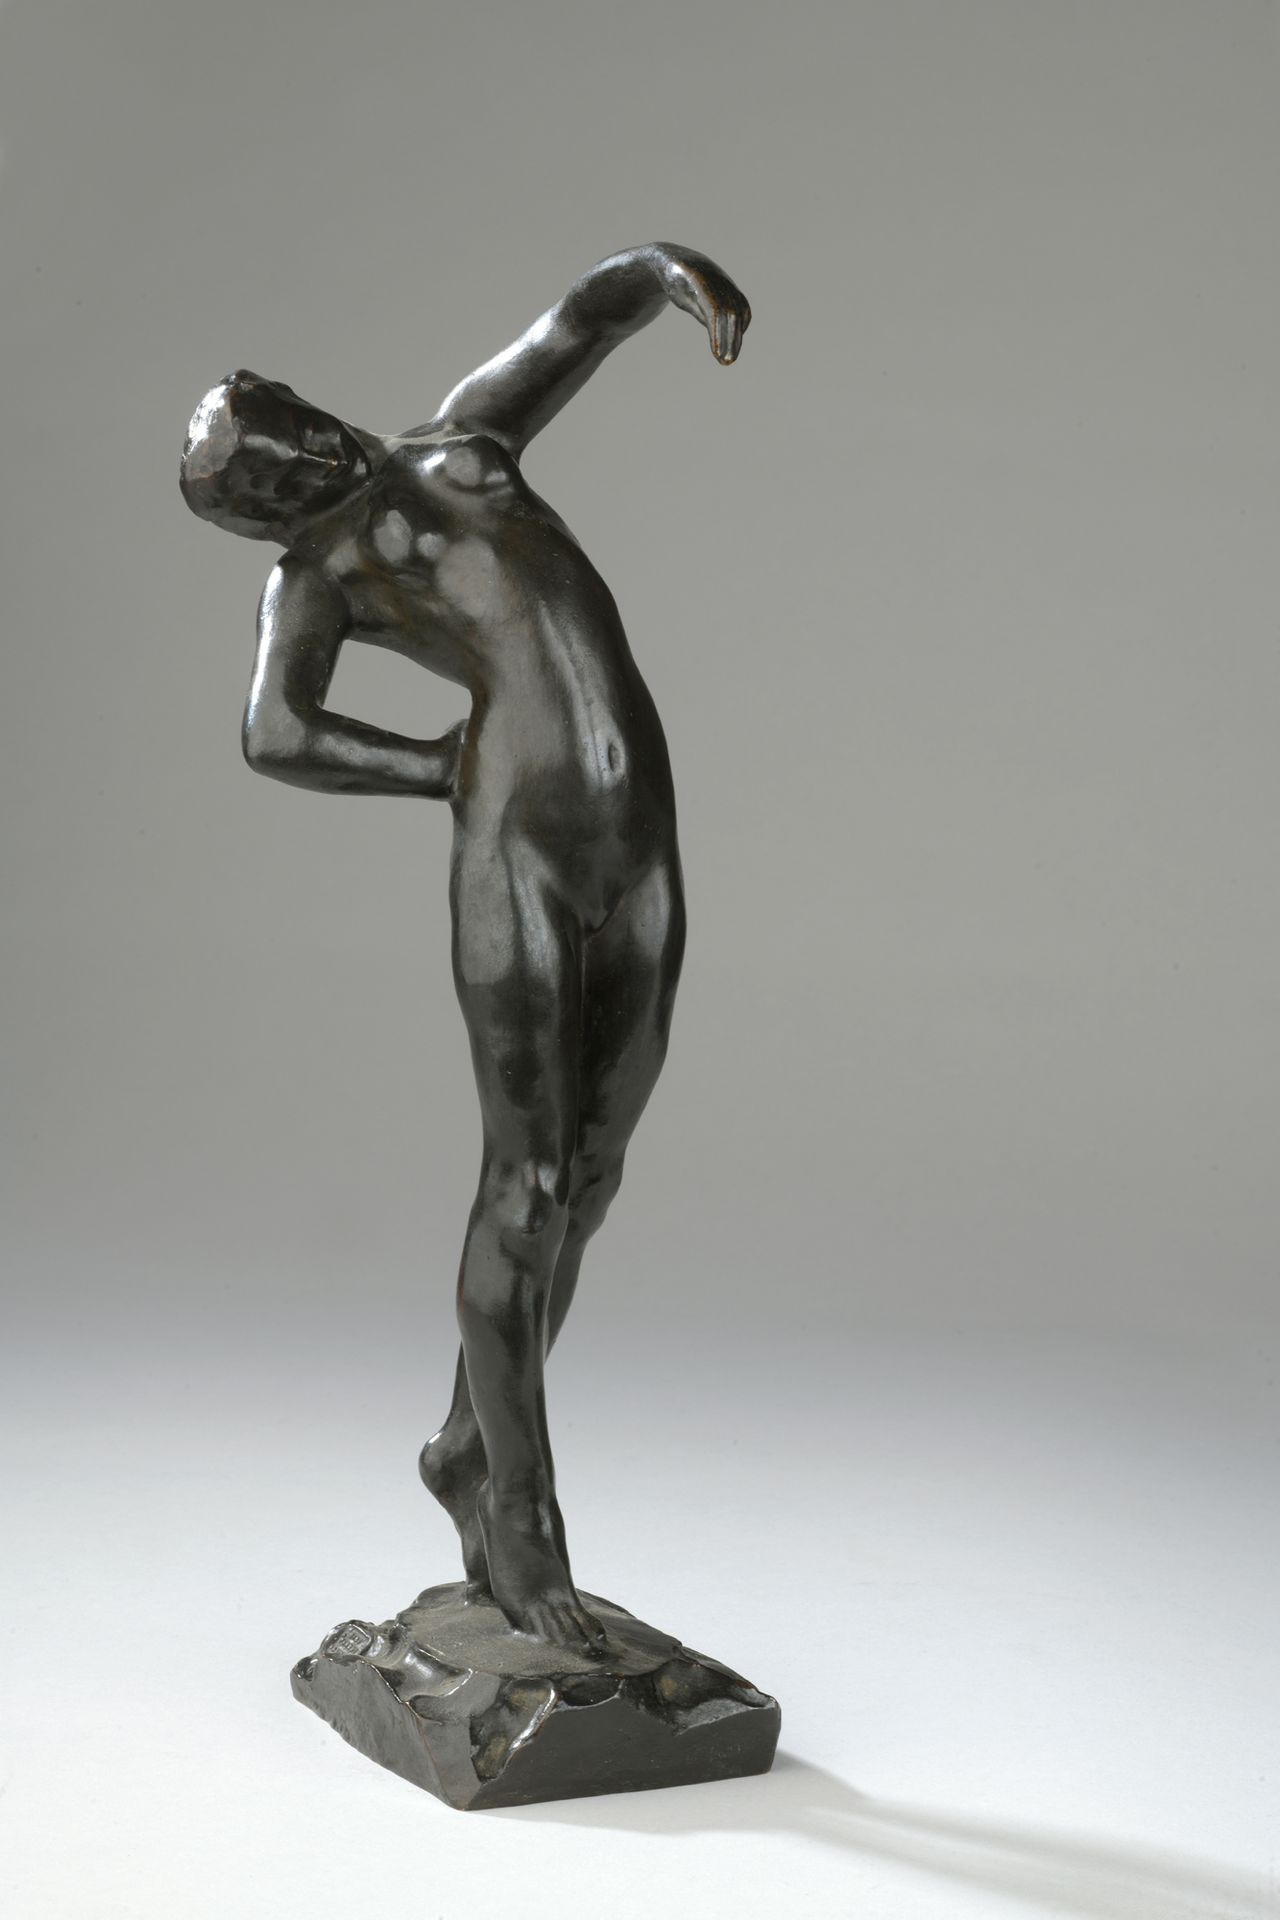 Null 约瑟夫-安托万-贝尔纳(1866-1931)

裸体舞者

带有棕色铜锈的青铜器

阳台上有签名 "J Bernard"。

印有创始人的印章 "CI&hellip;